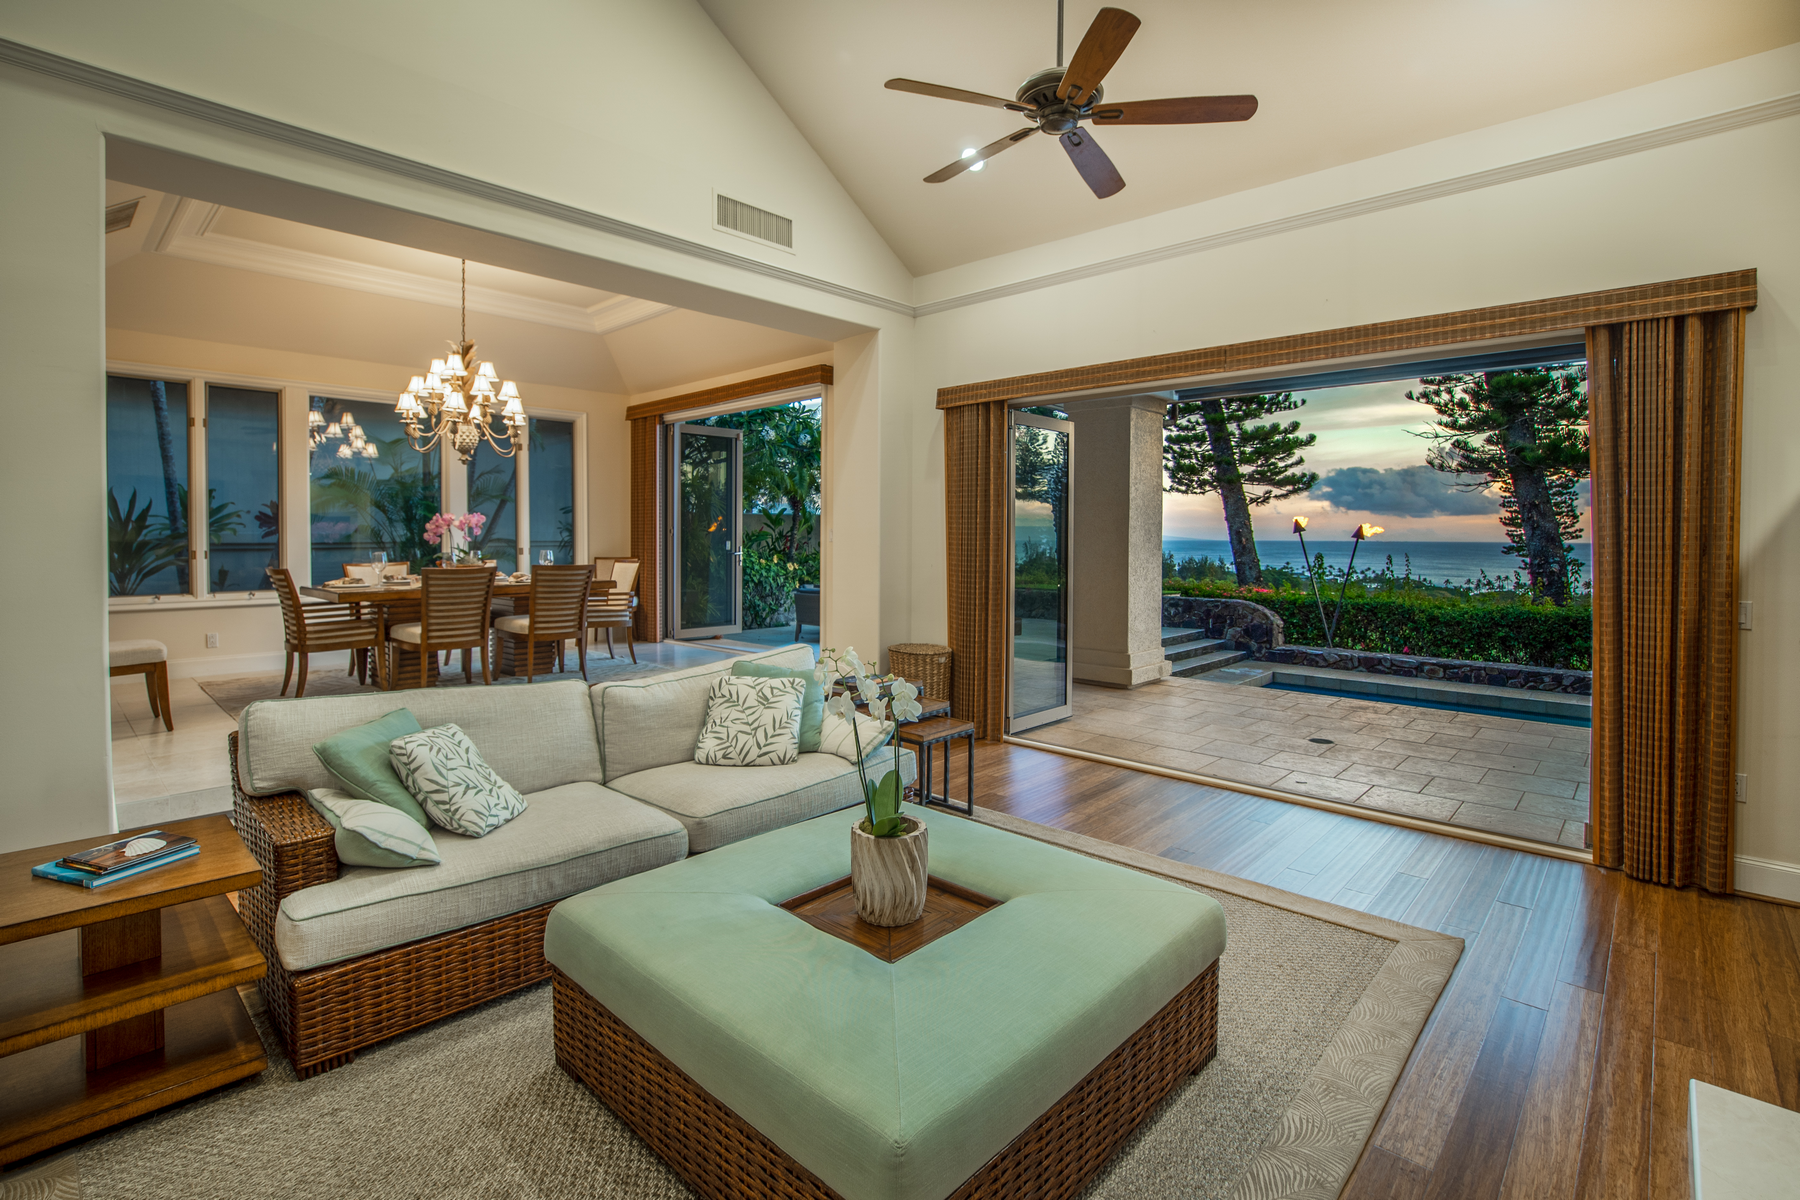 708 Fairway Drive: Modern Hawaiian Interior Design Meets Kapalua's